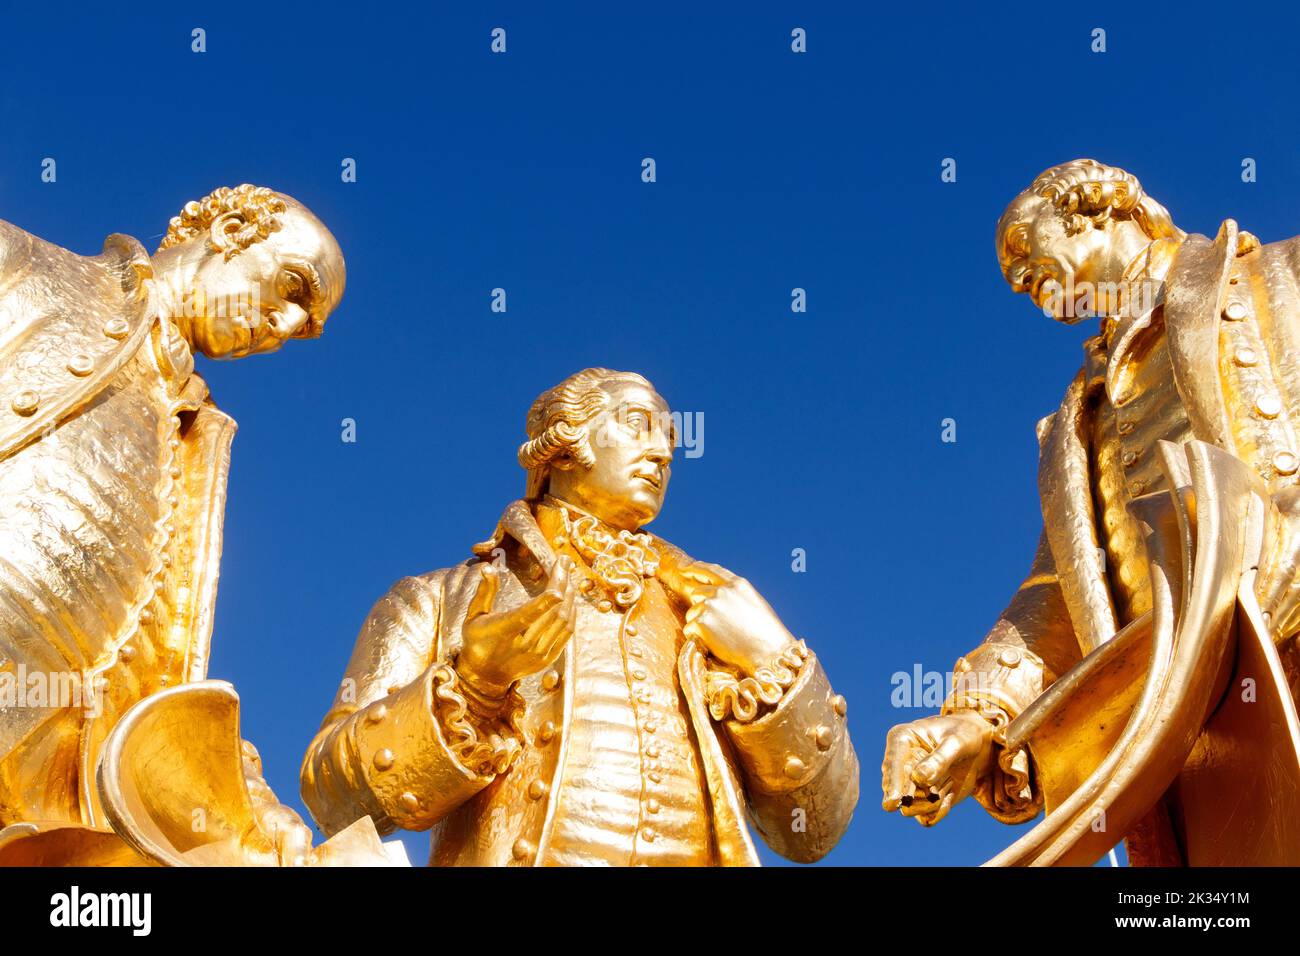 looking up trio gold, bronze, statue engineers James Watt, Matthew Boulton & William Murdoch against blue sky in Centenary Square, Birmingham, UK. Stock Photo